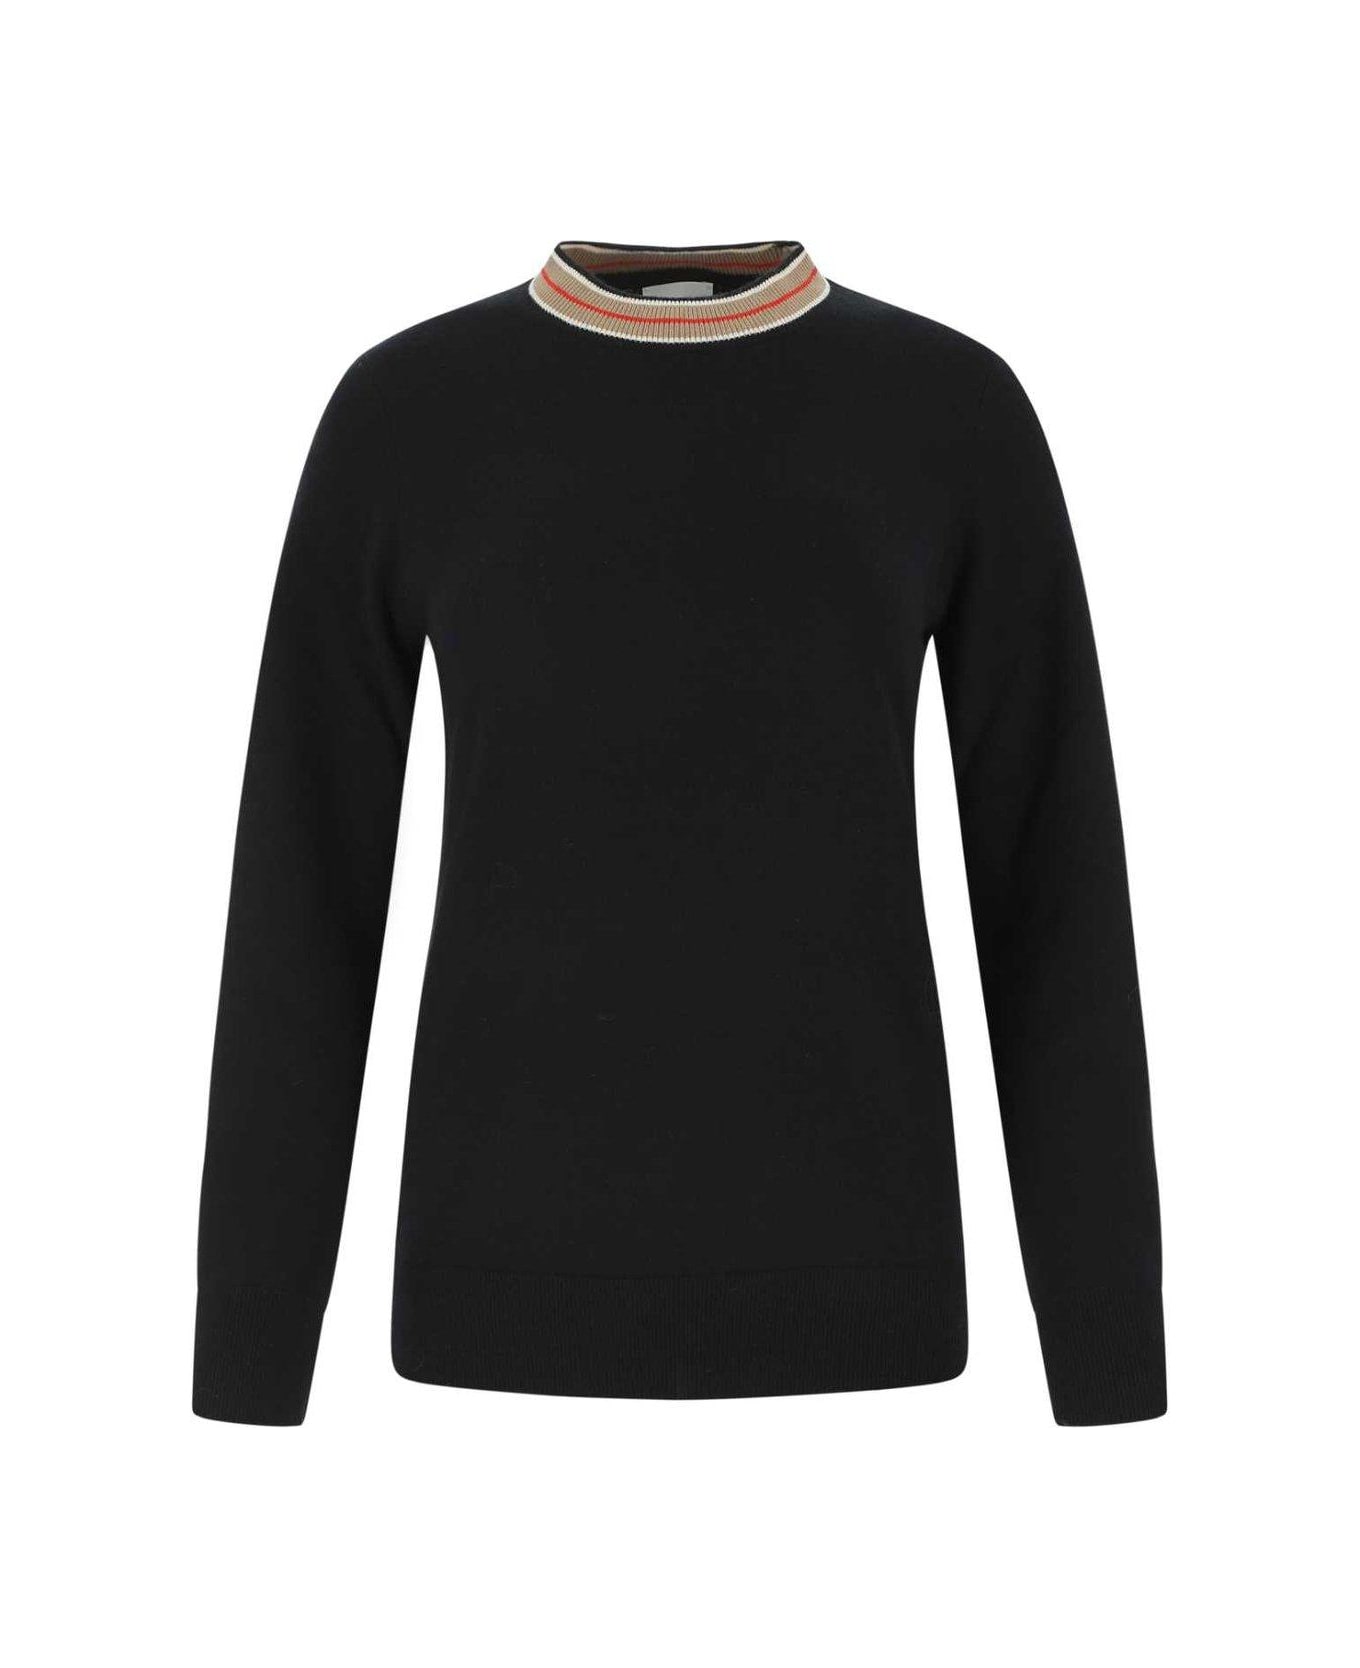 Burberry Stripe Detailed Sweater - Black フリース